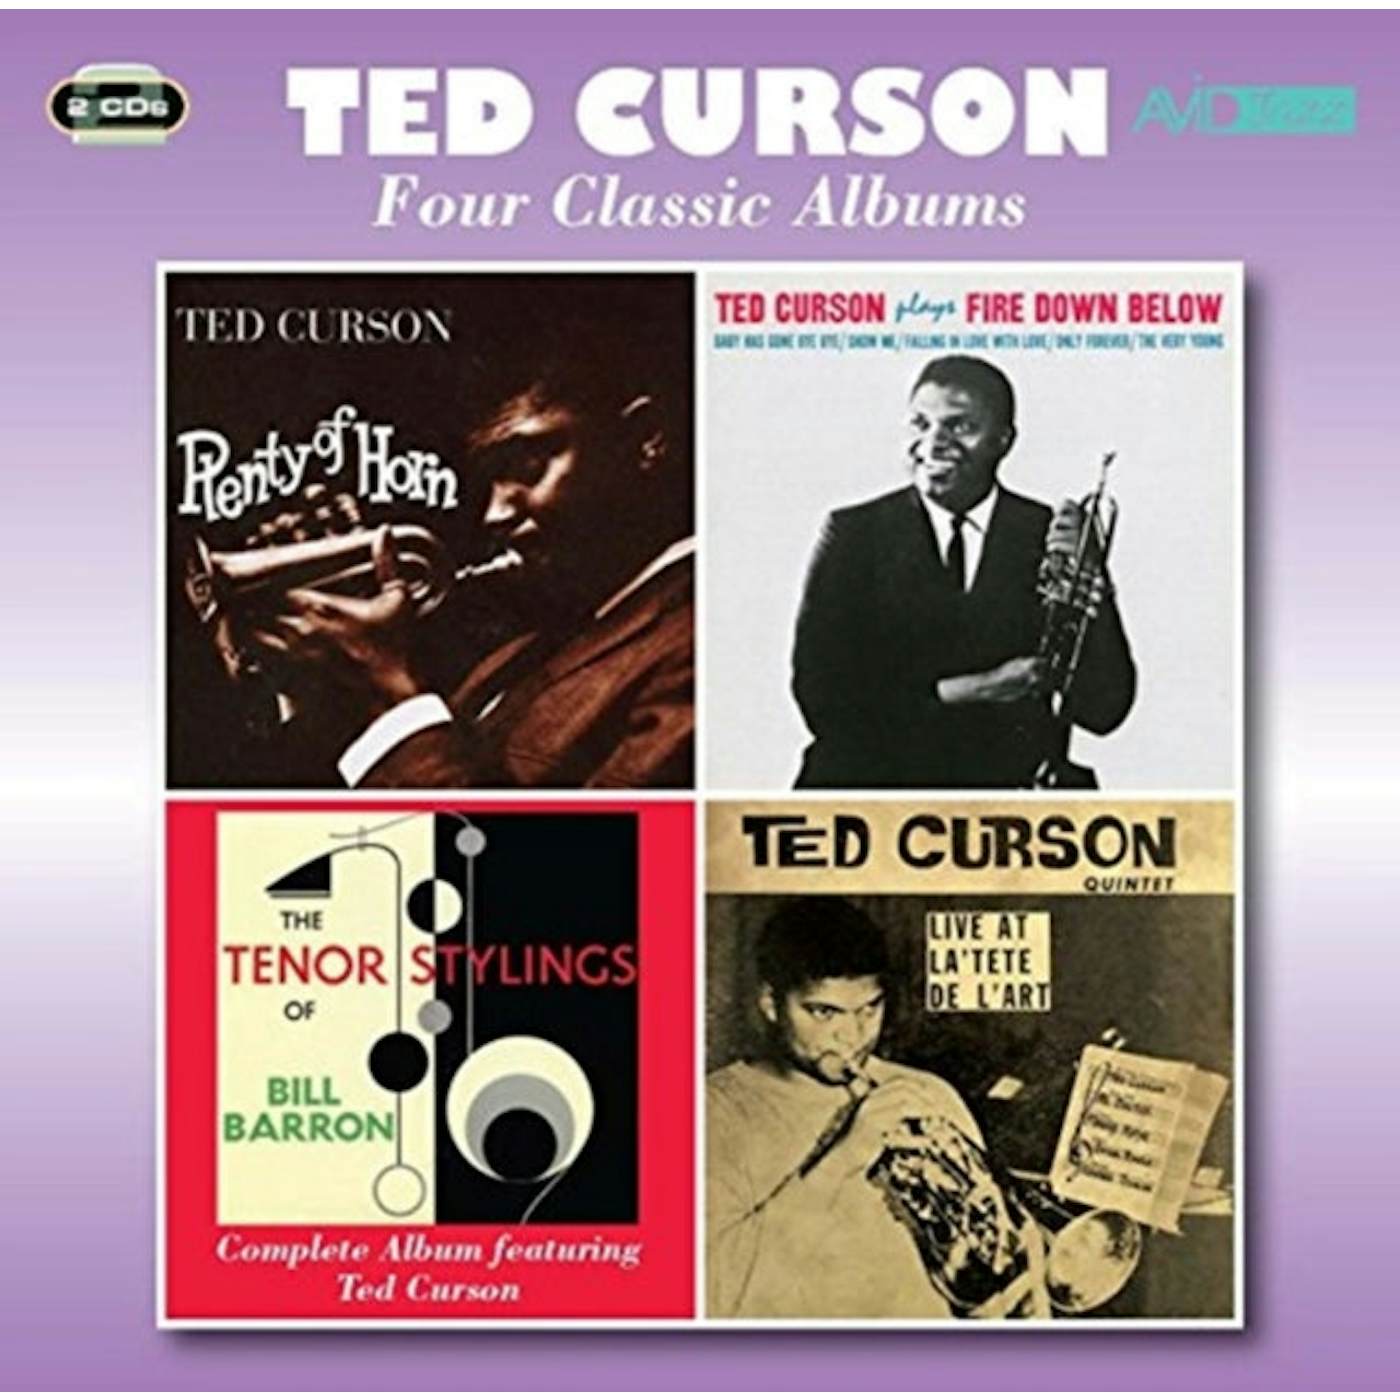 Ted Curson CD - Four Classic Albums (Plenty Of Horn / Fire Down Below / The Tenor Stylings Of Bill Barron / Live At La Tete De L'art)